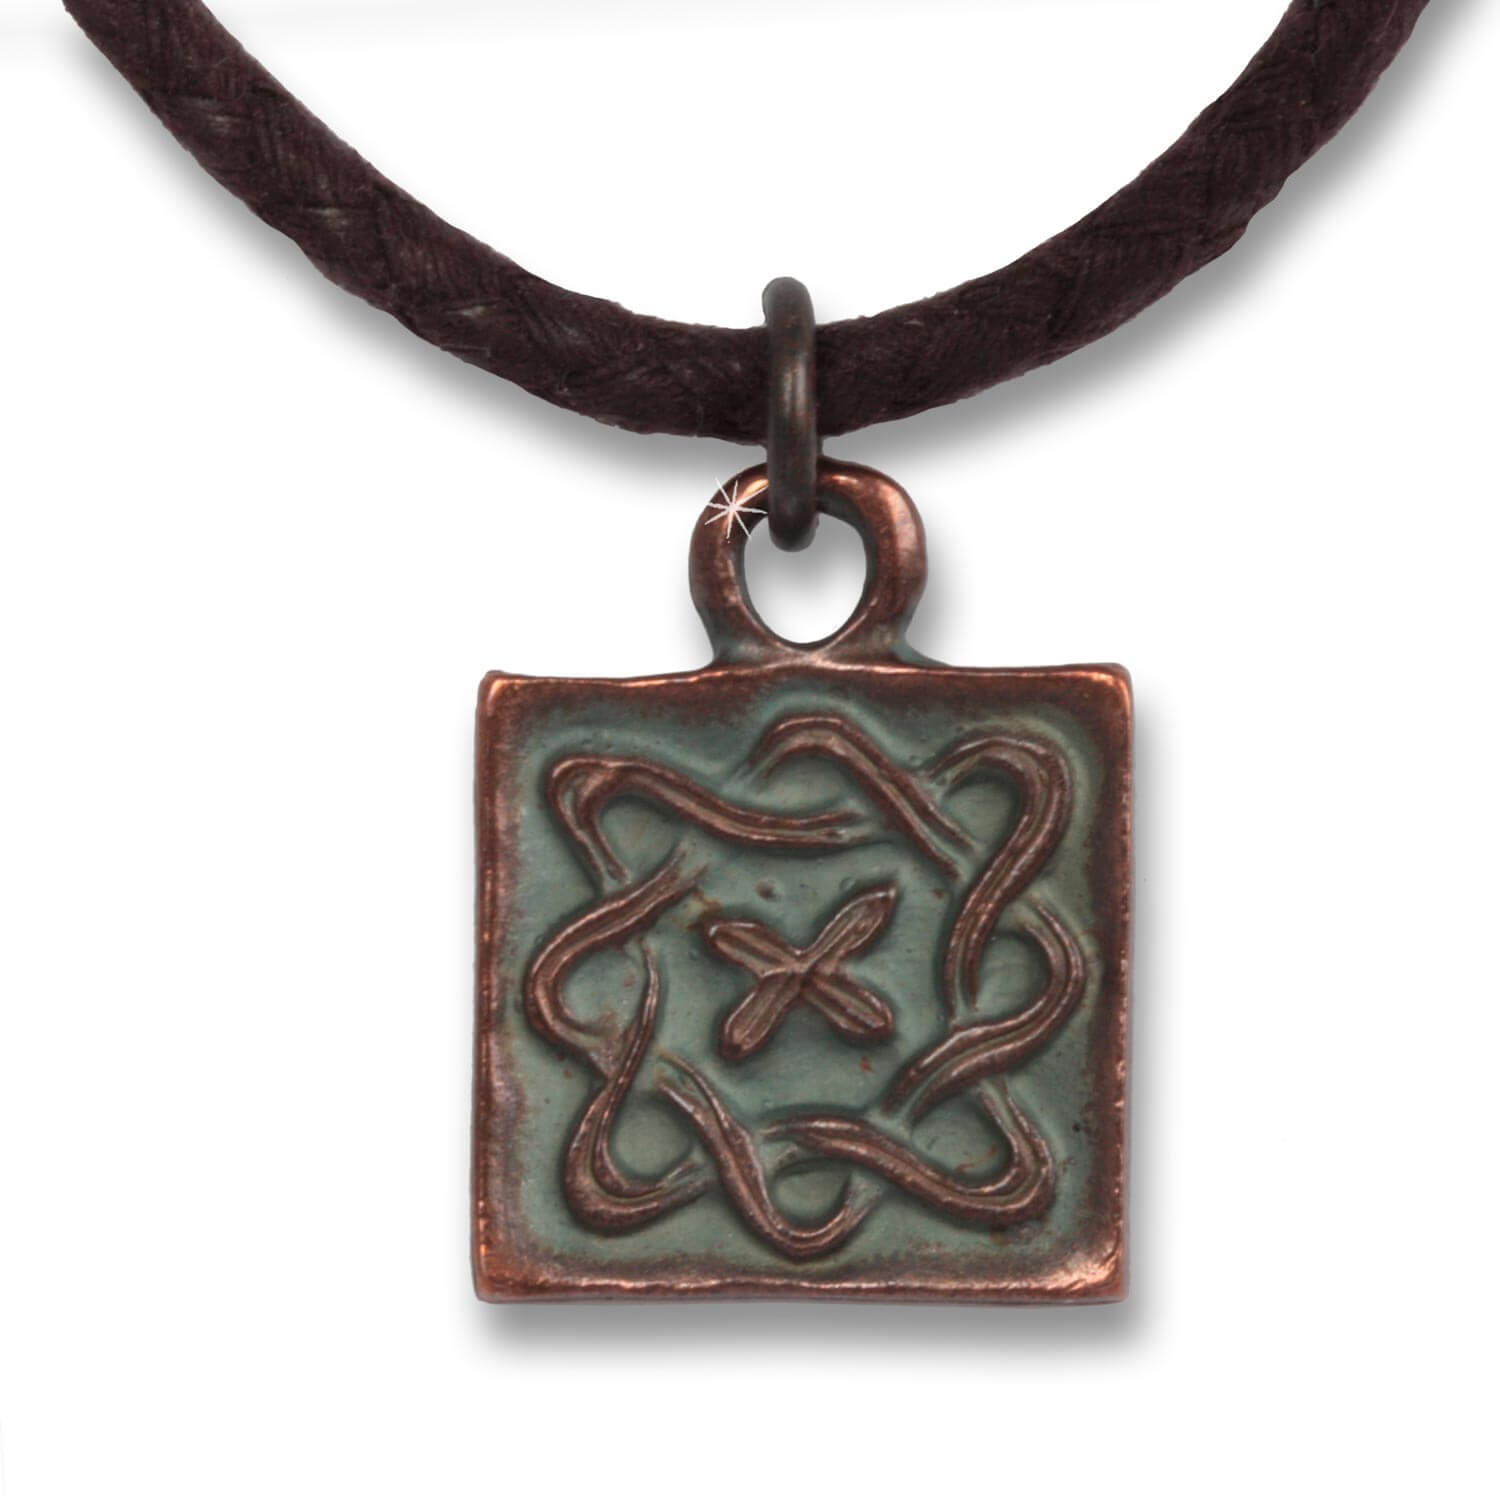 Infinity Square - Indian Symbols Herren-Kette Antique Copper aus Baumwolle, 54 cm lang